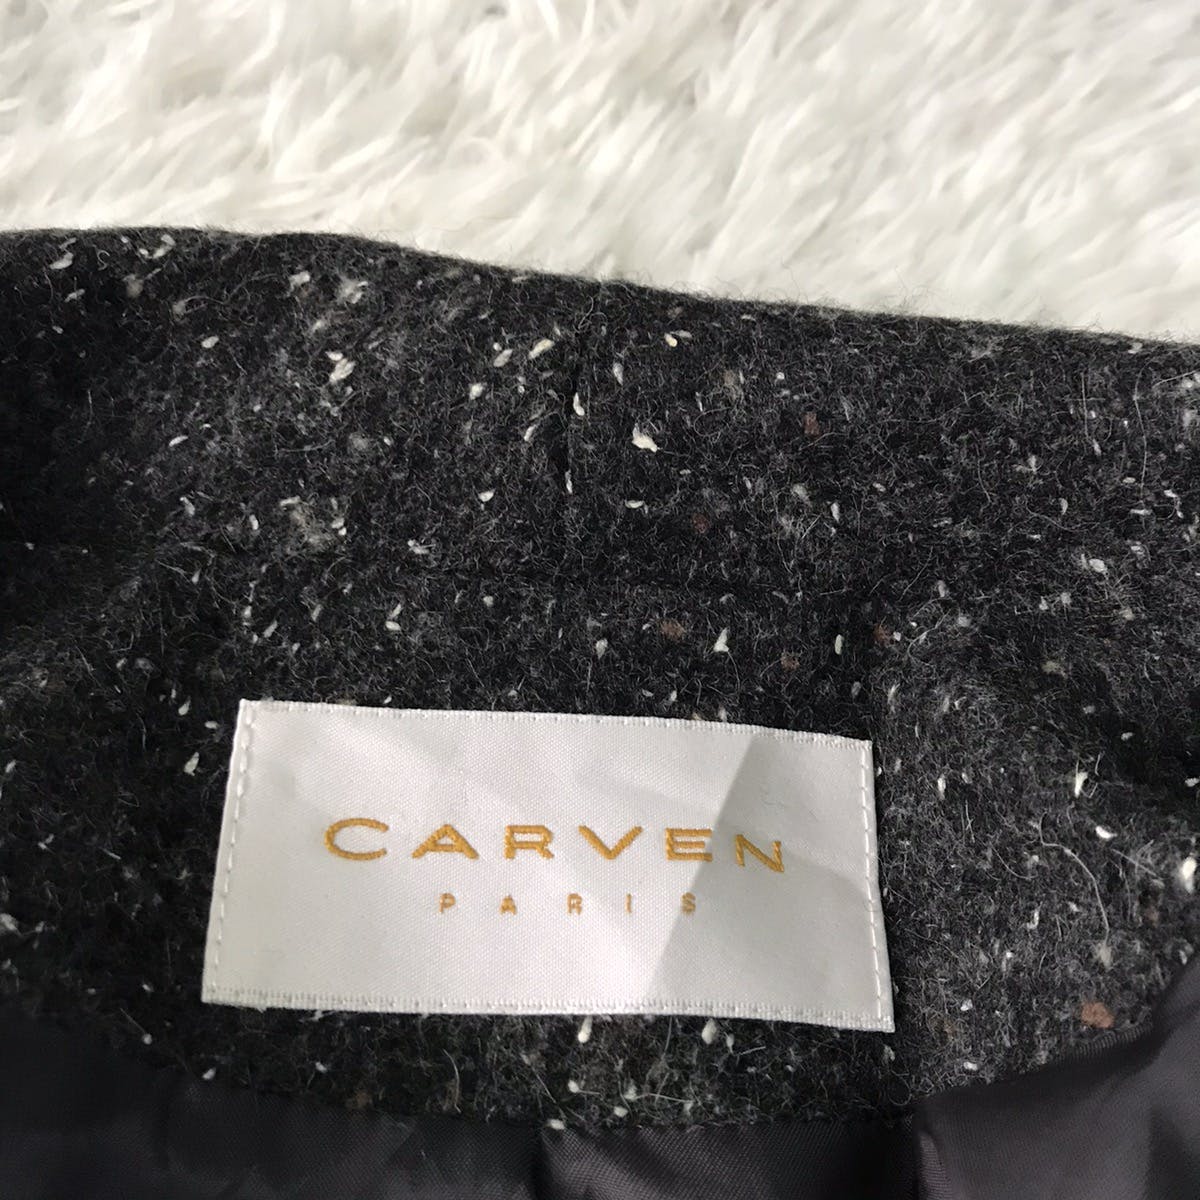 Carven paris jacket made in Japan - 13